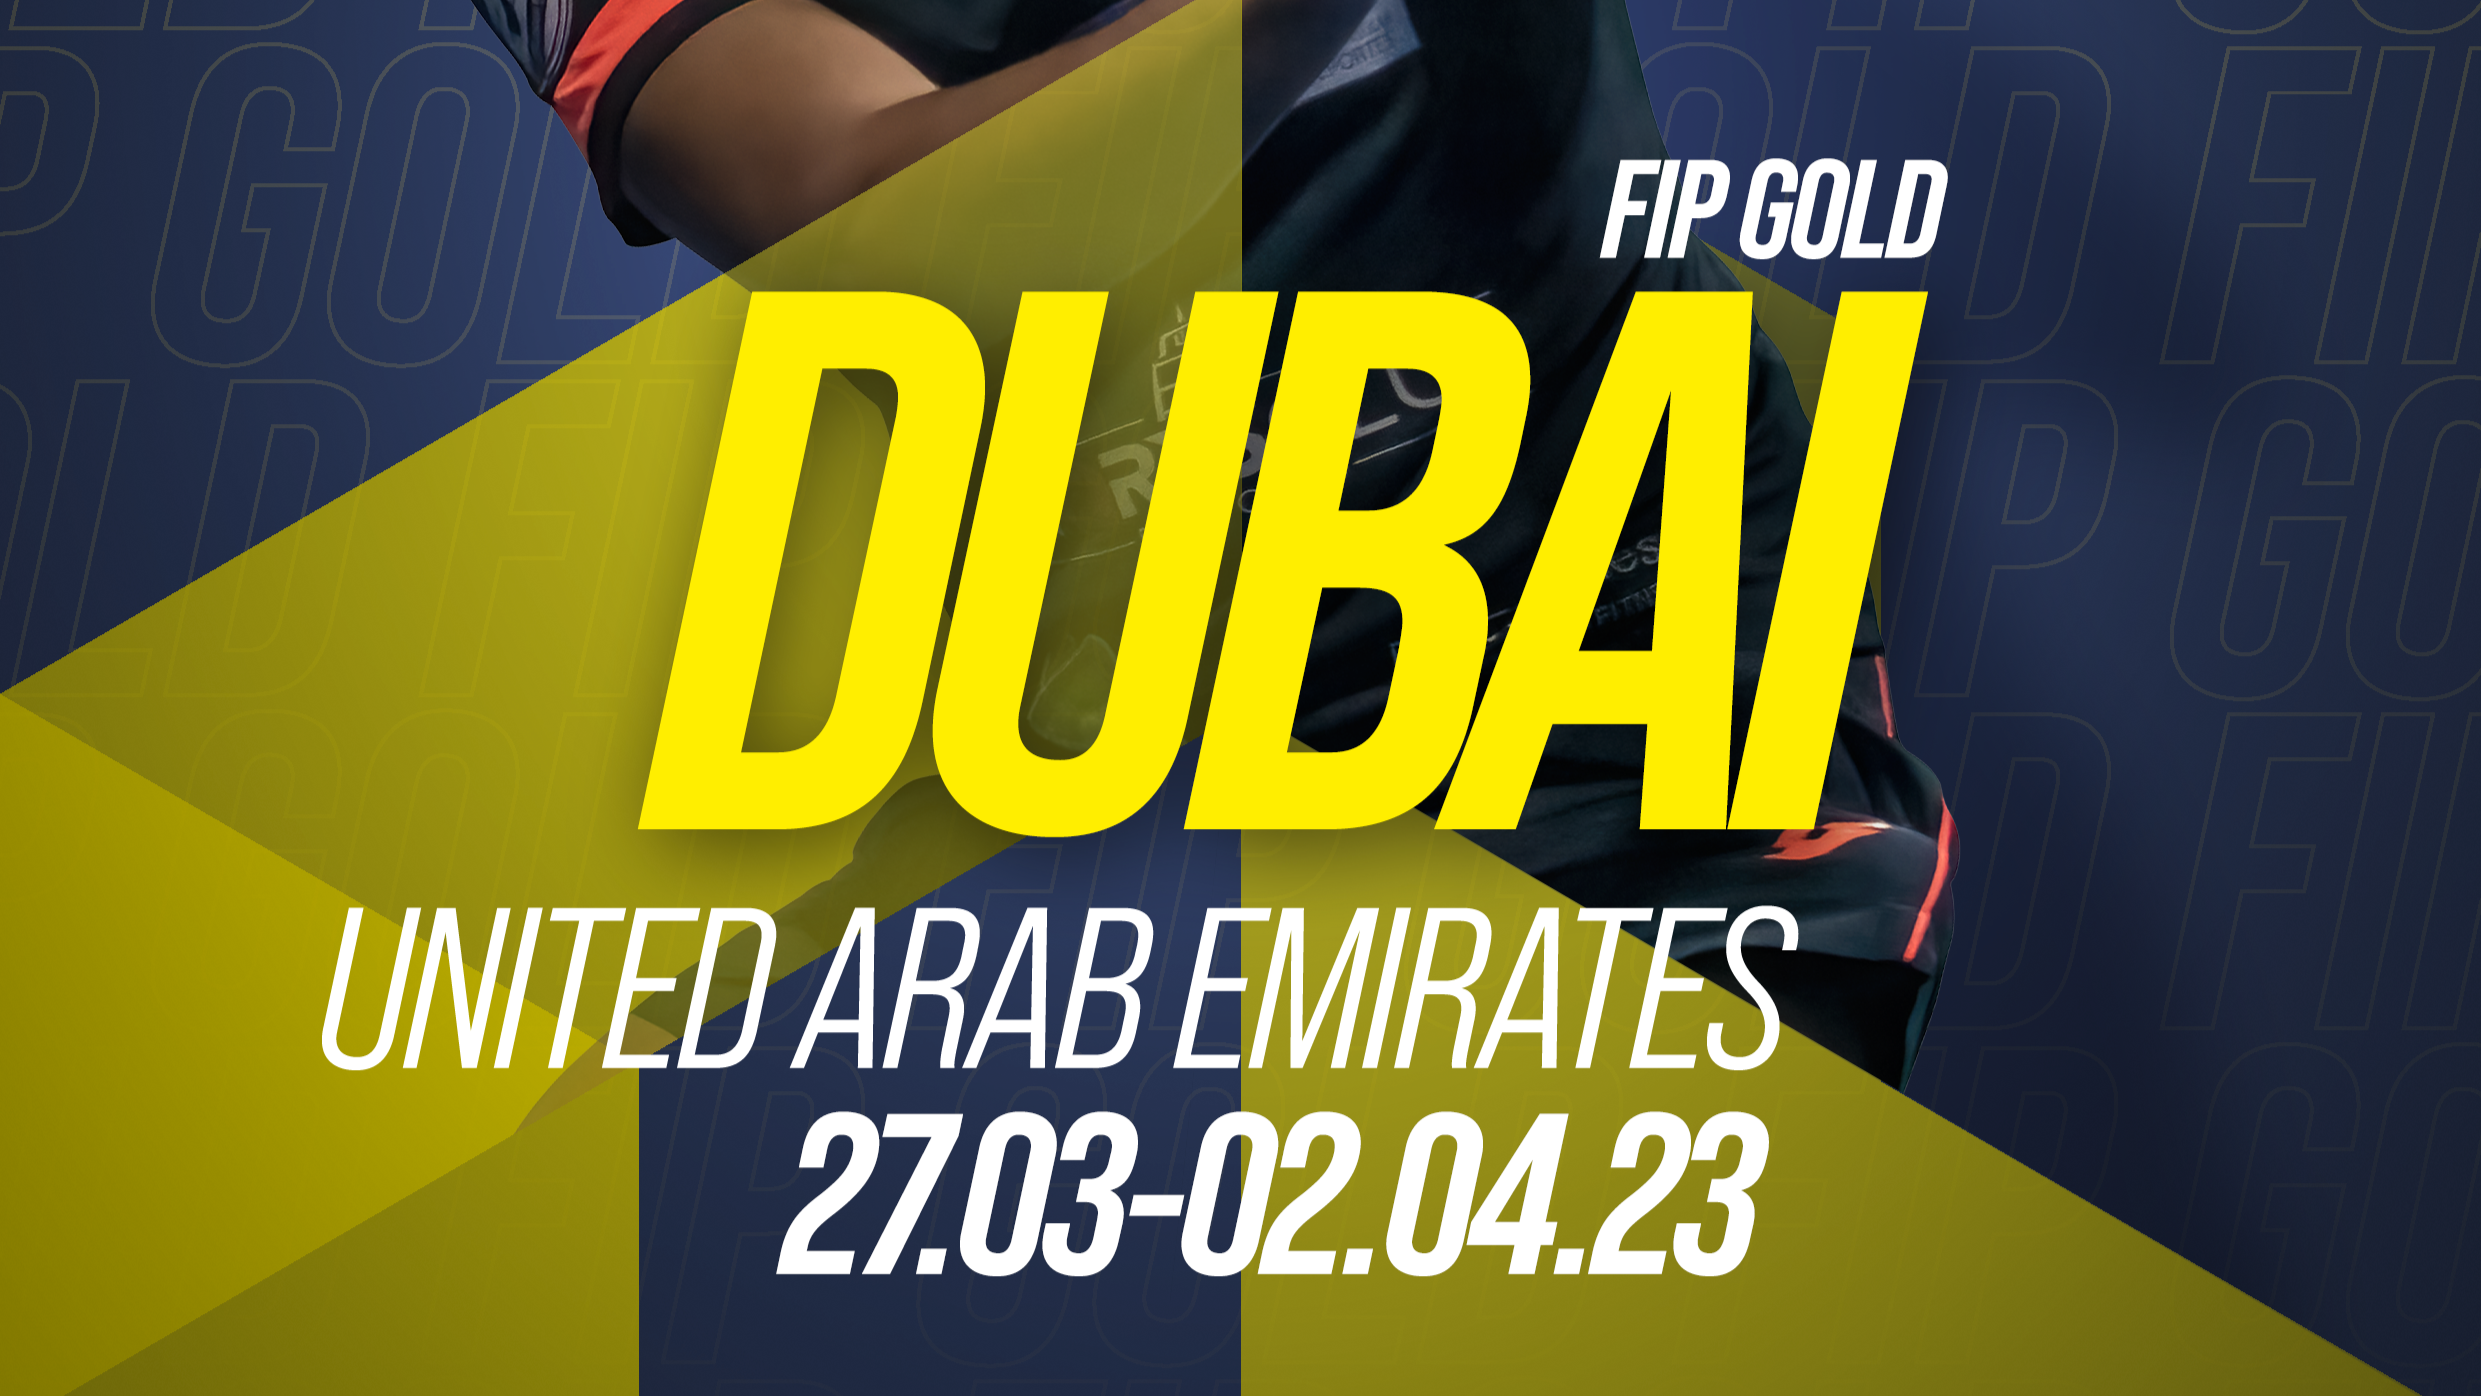 FIP Gold Dubai Viertelfinale live